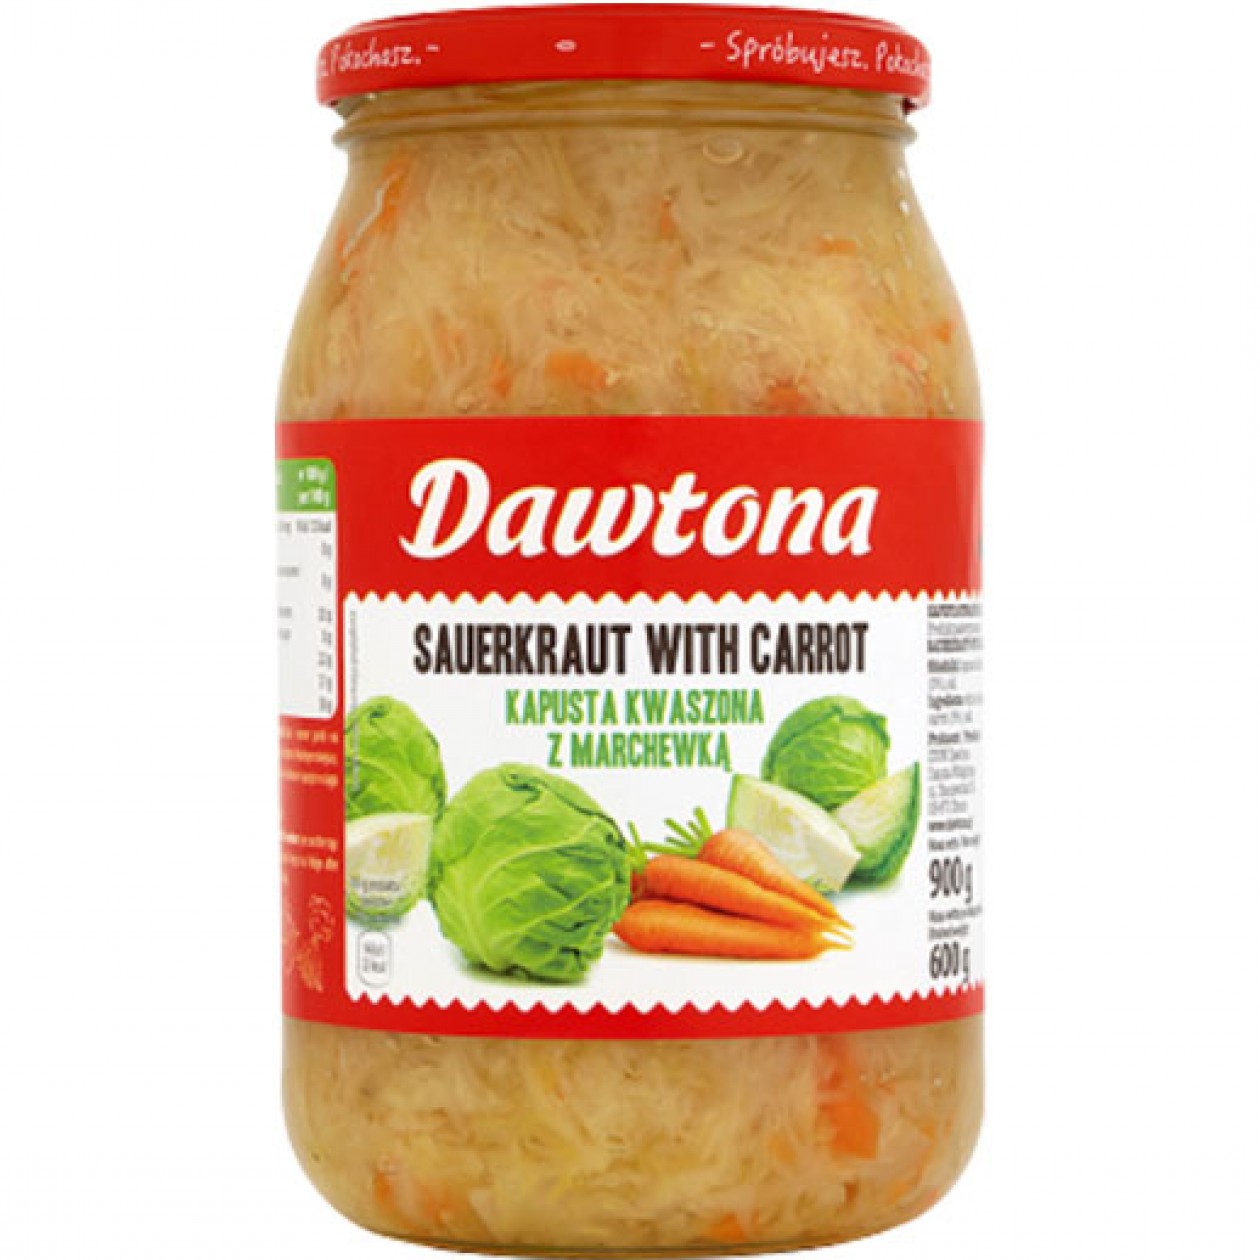 Dawtona Kapusta Marchewka (Sauerkraut-Carrot) 6x900g